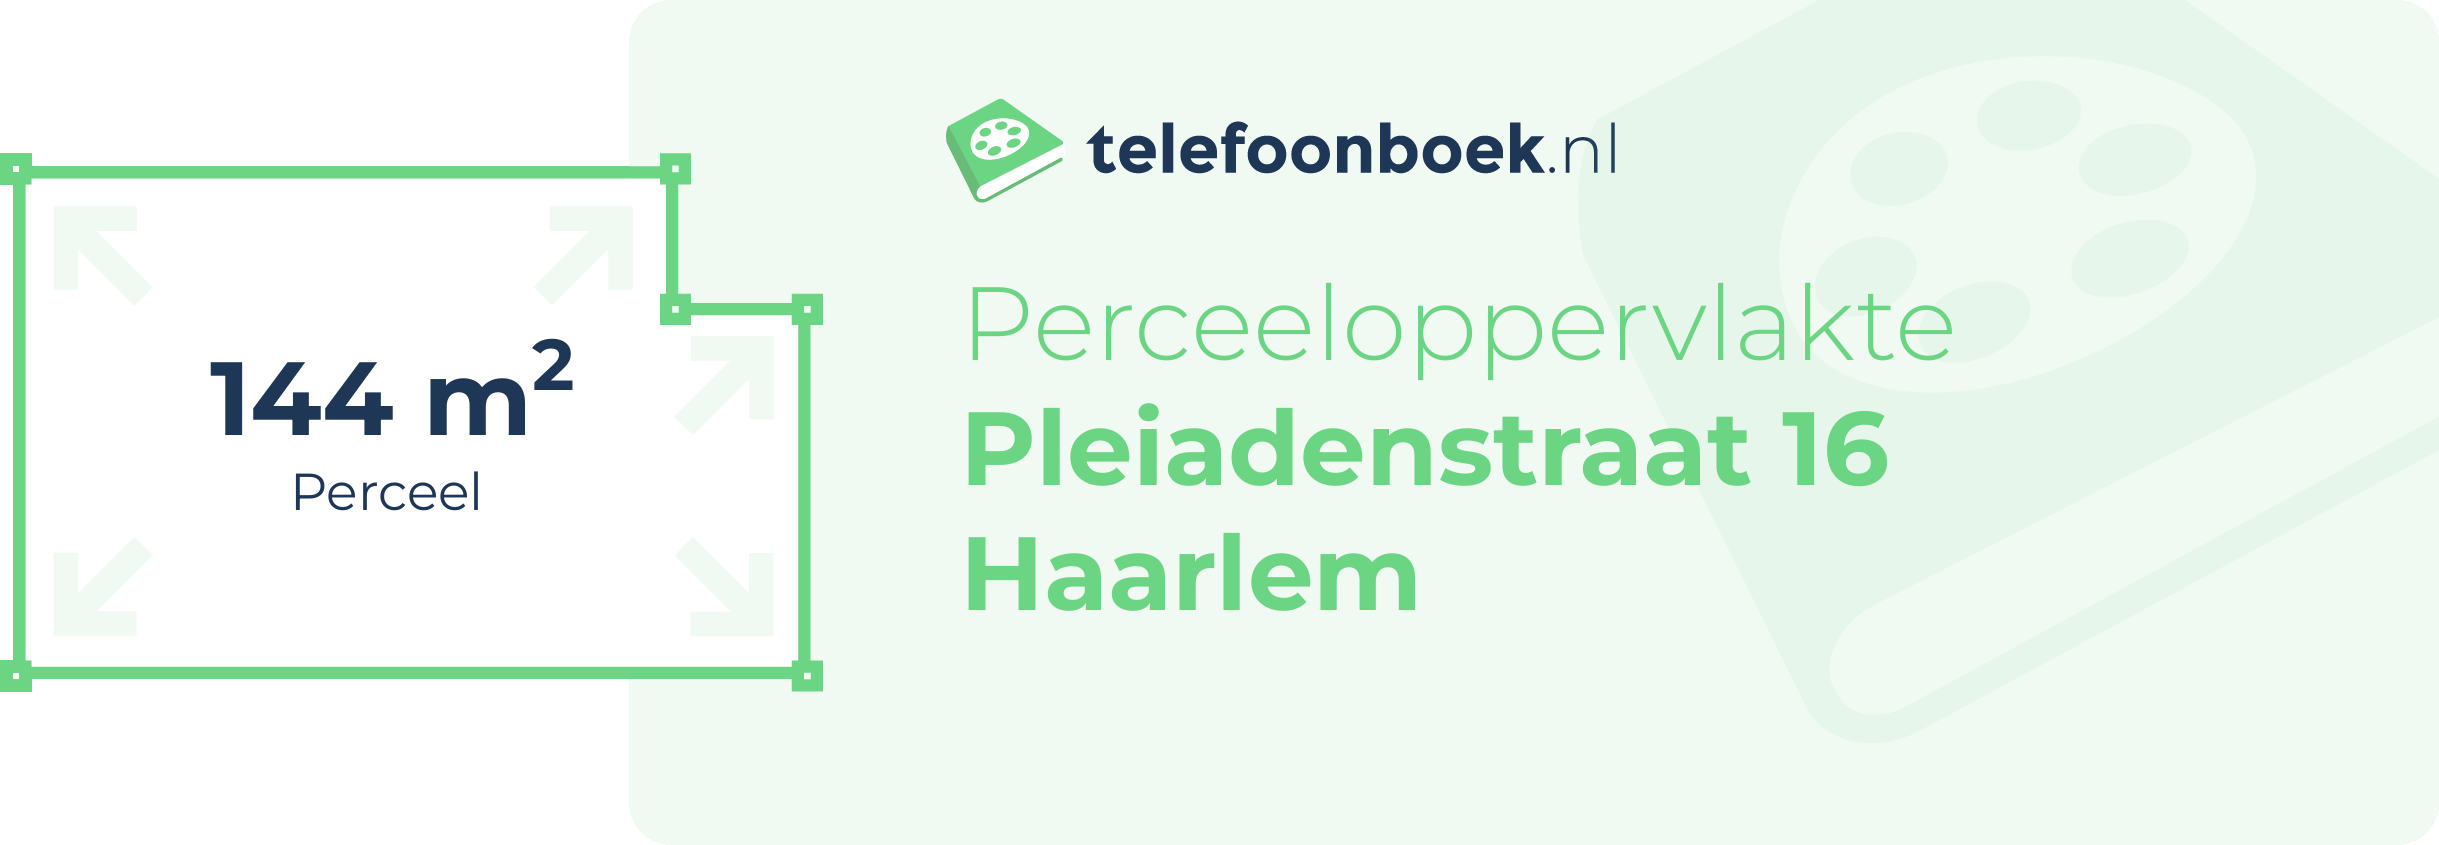 Perceeloppervlakte Pleiadenstraat 16 Haarlem